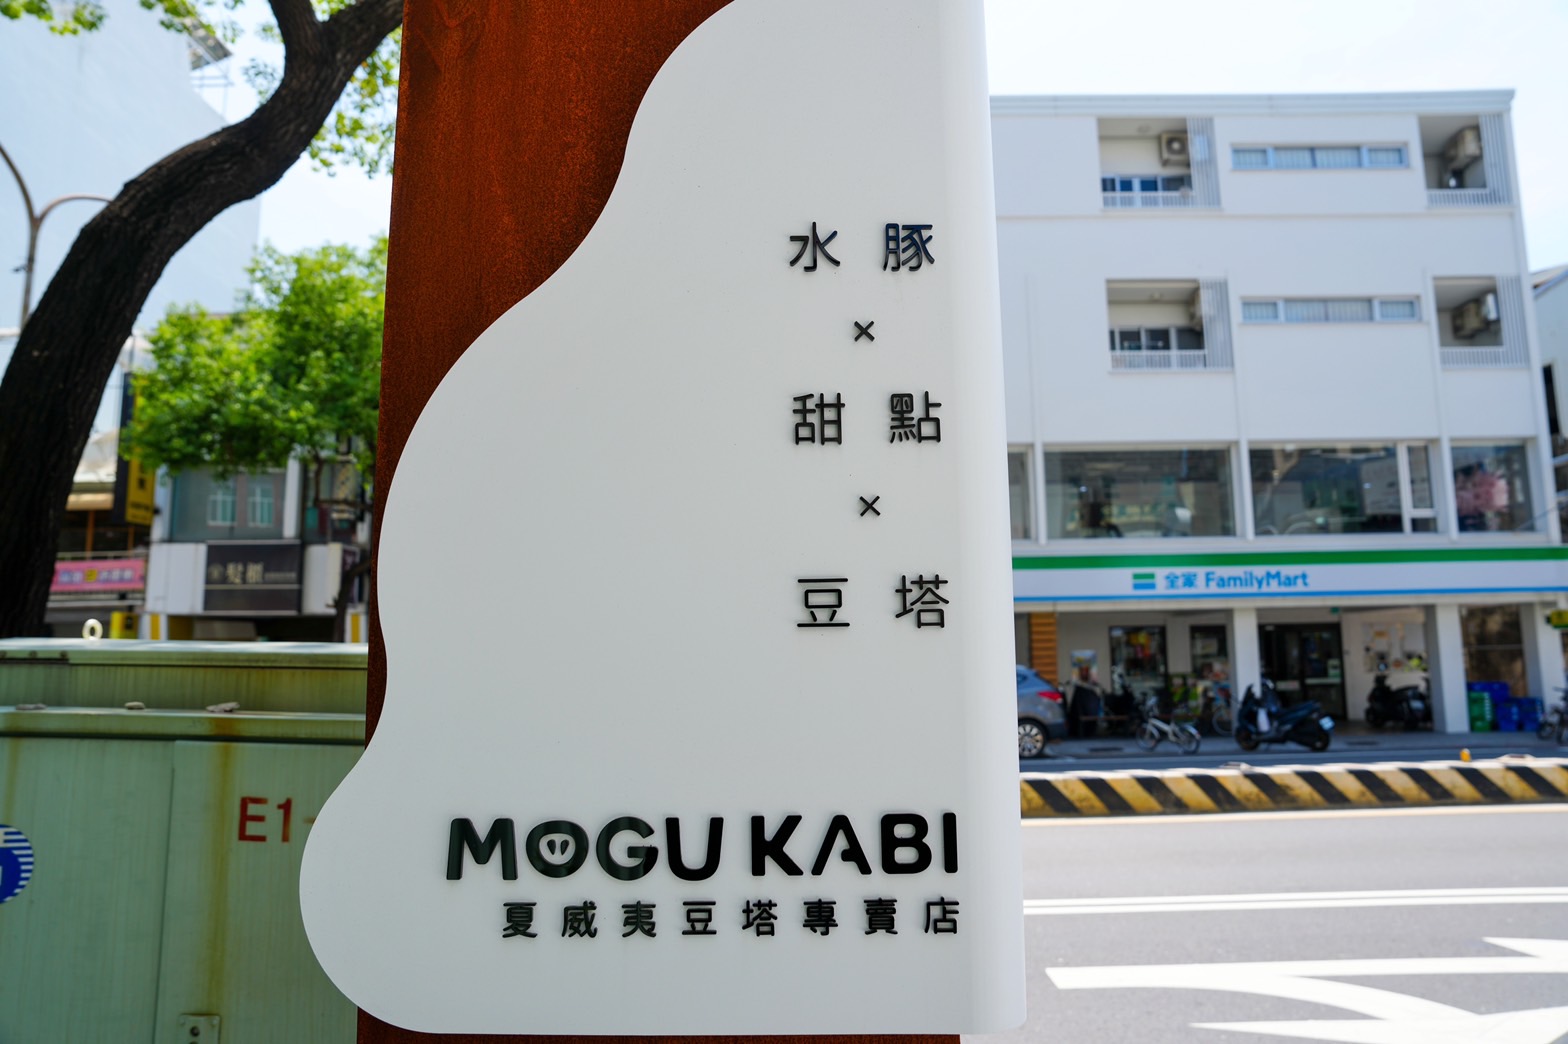 MOGU KABI 夏威夷豆塔專賣店